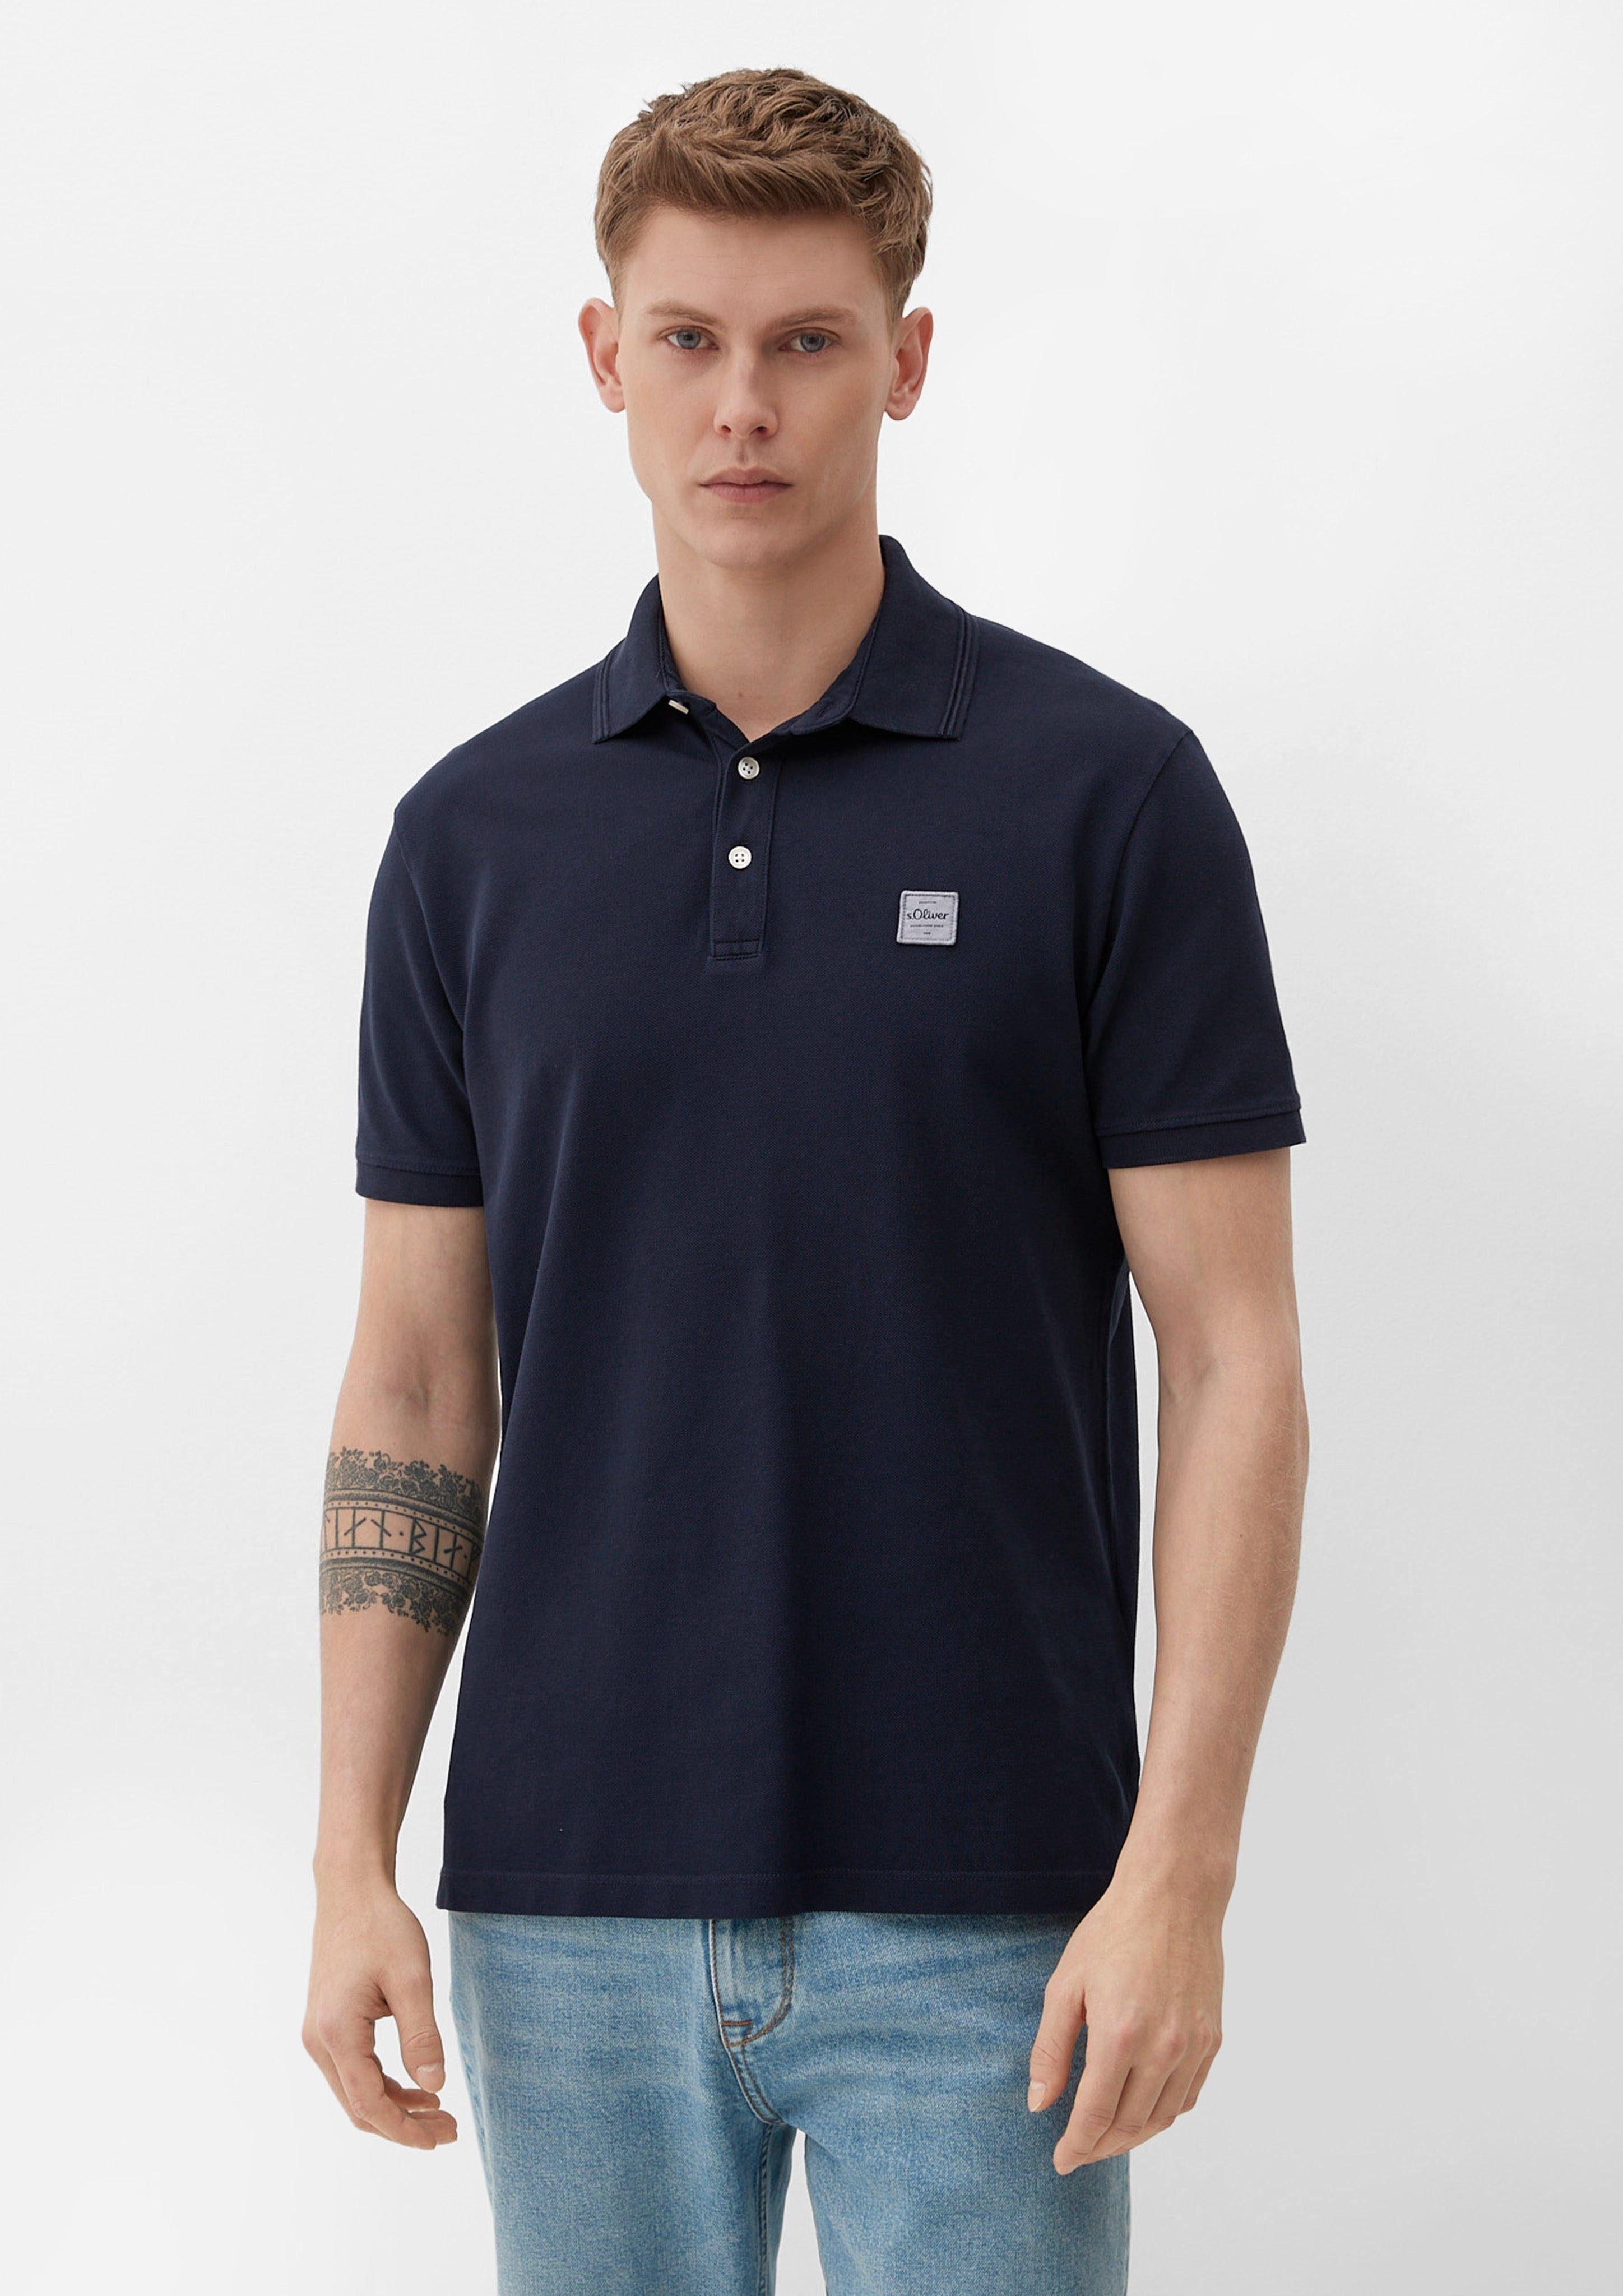 Logo-Patch Poloshirt navy s.Oliver Label-Patch Dye, Polo-Shirt mit Garment